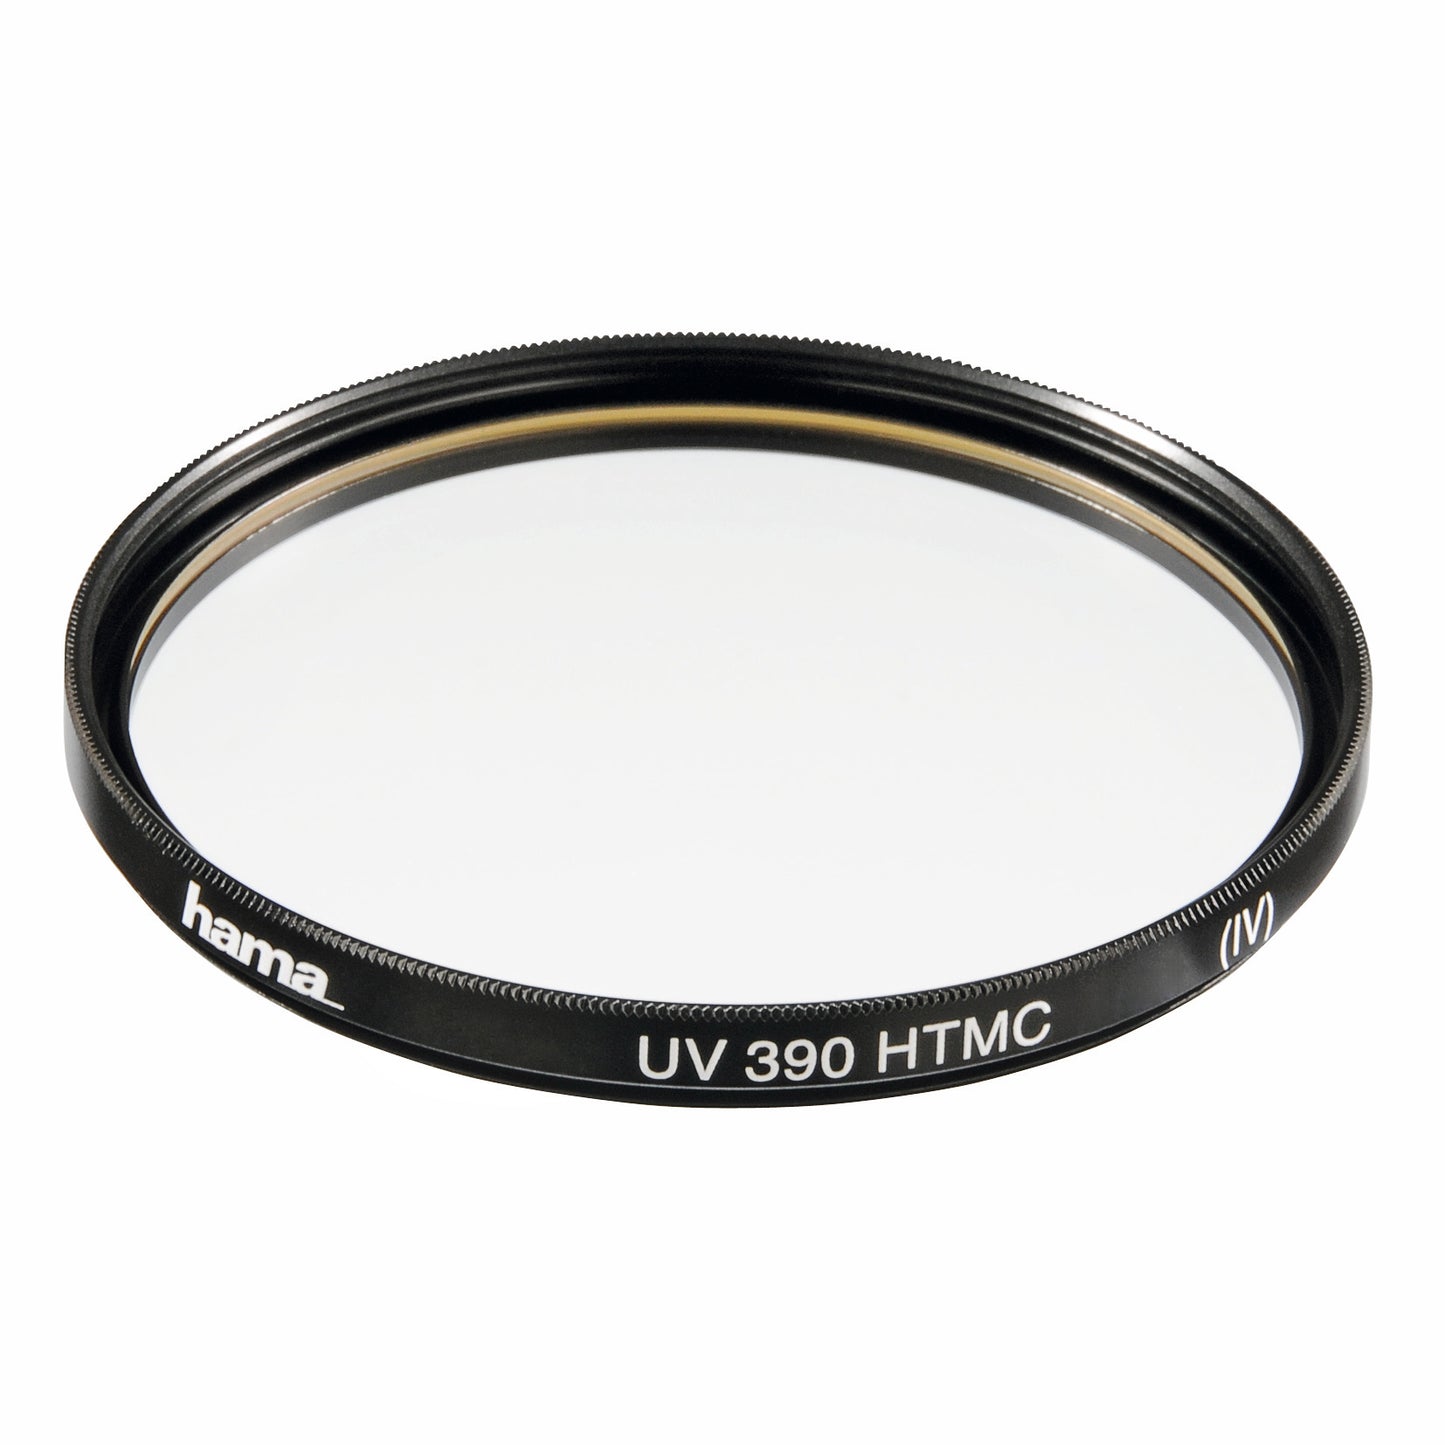 UV Filter 390, HTMC multi-coated, 62.0 mm